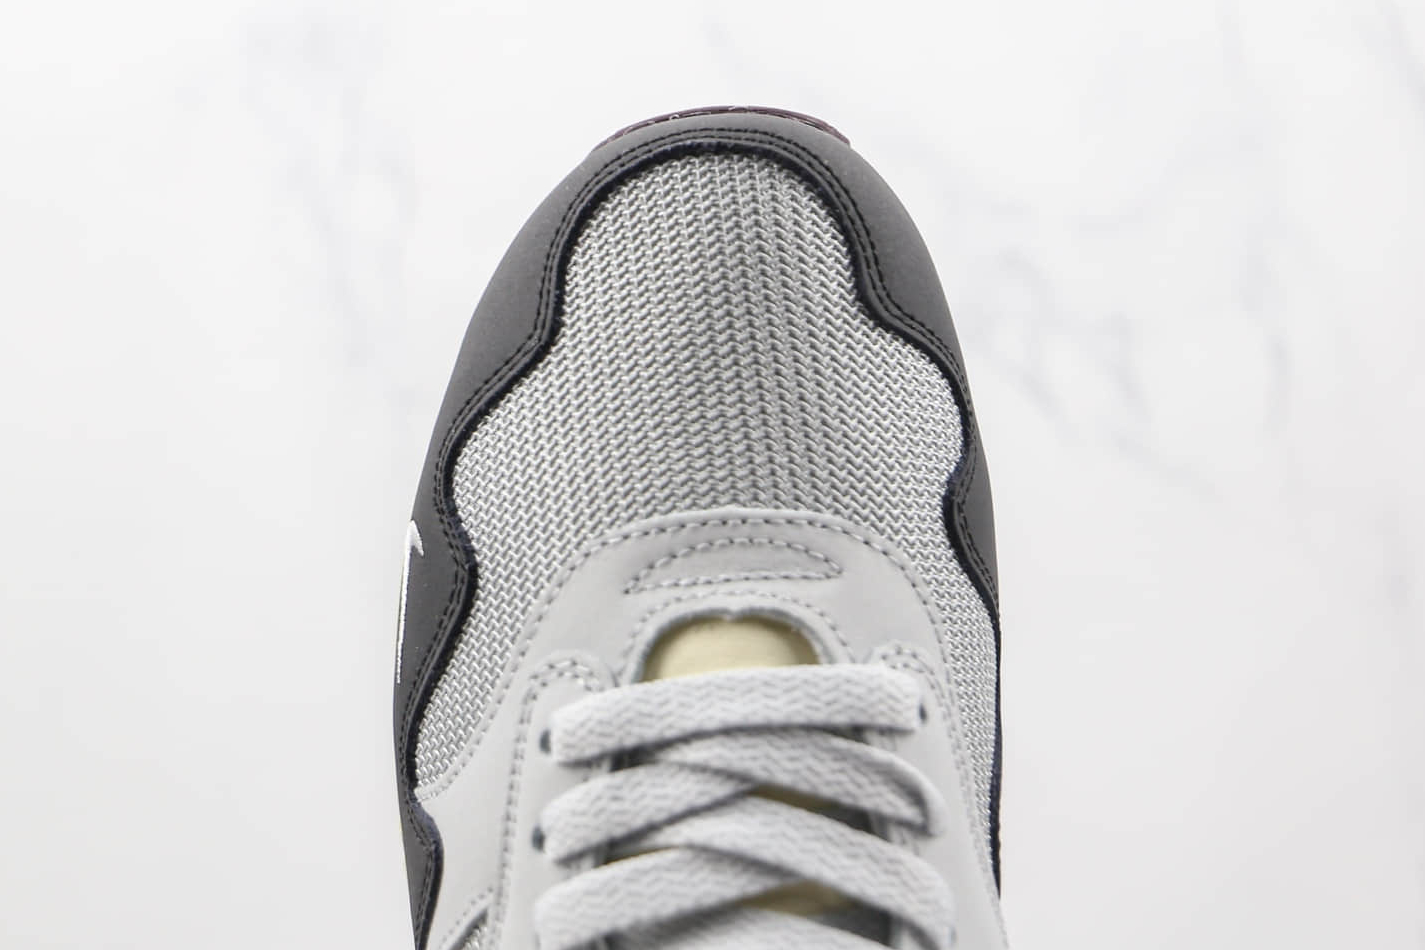 Patta x Nike Air Max 1 Monarch Dark Grey Black White DH1348-002 - Sleek & Stylish Sneakers from Patta and Nike